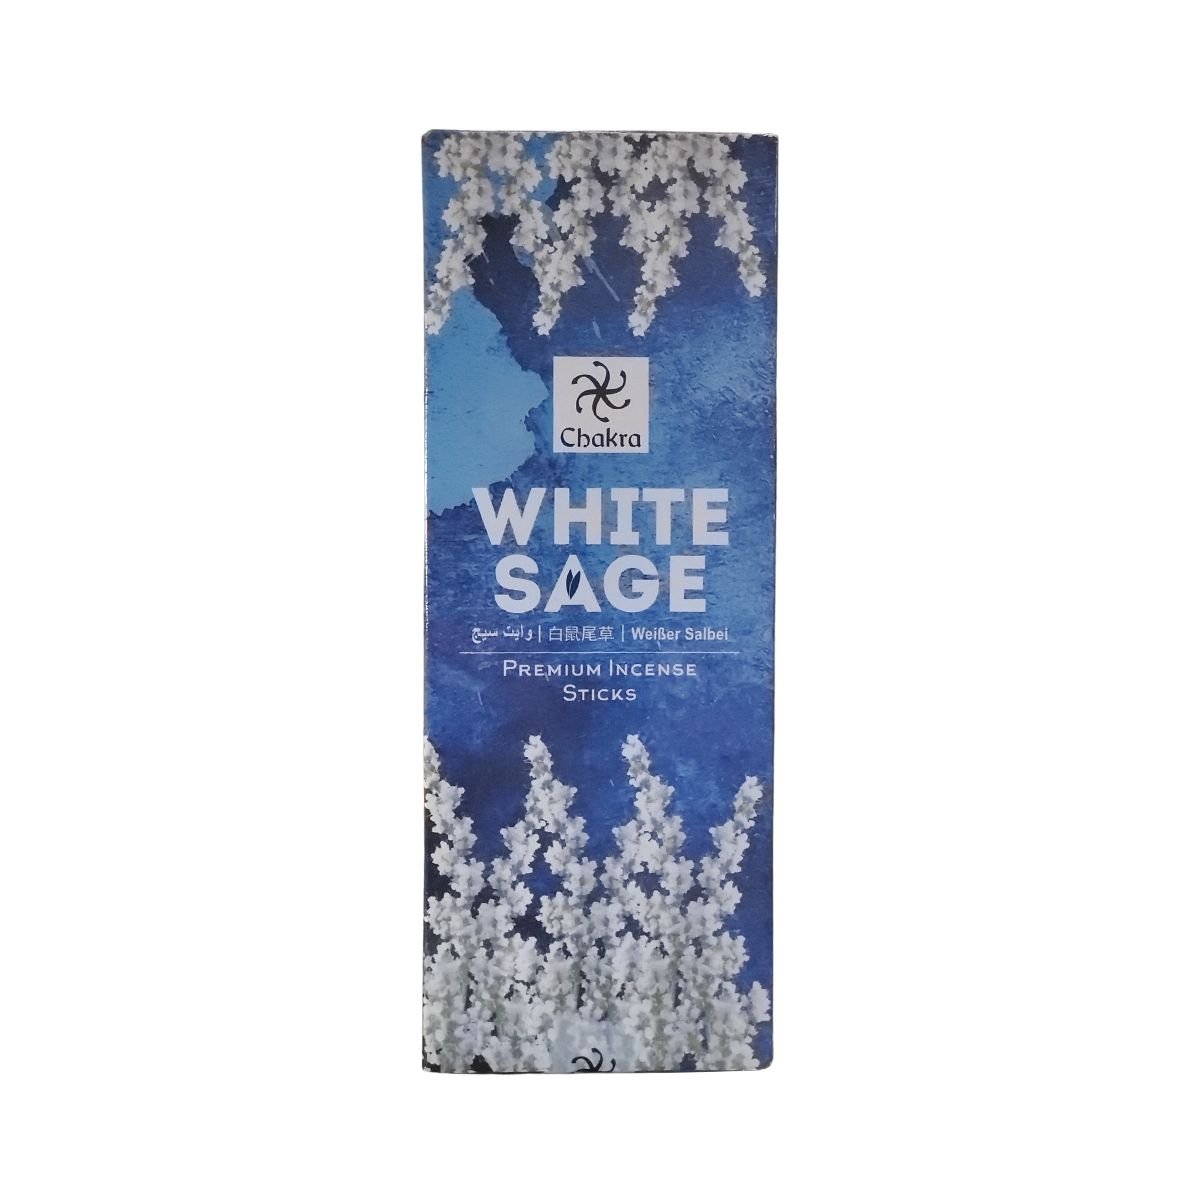 Premium Incense Sticks with White Sage